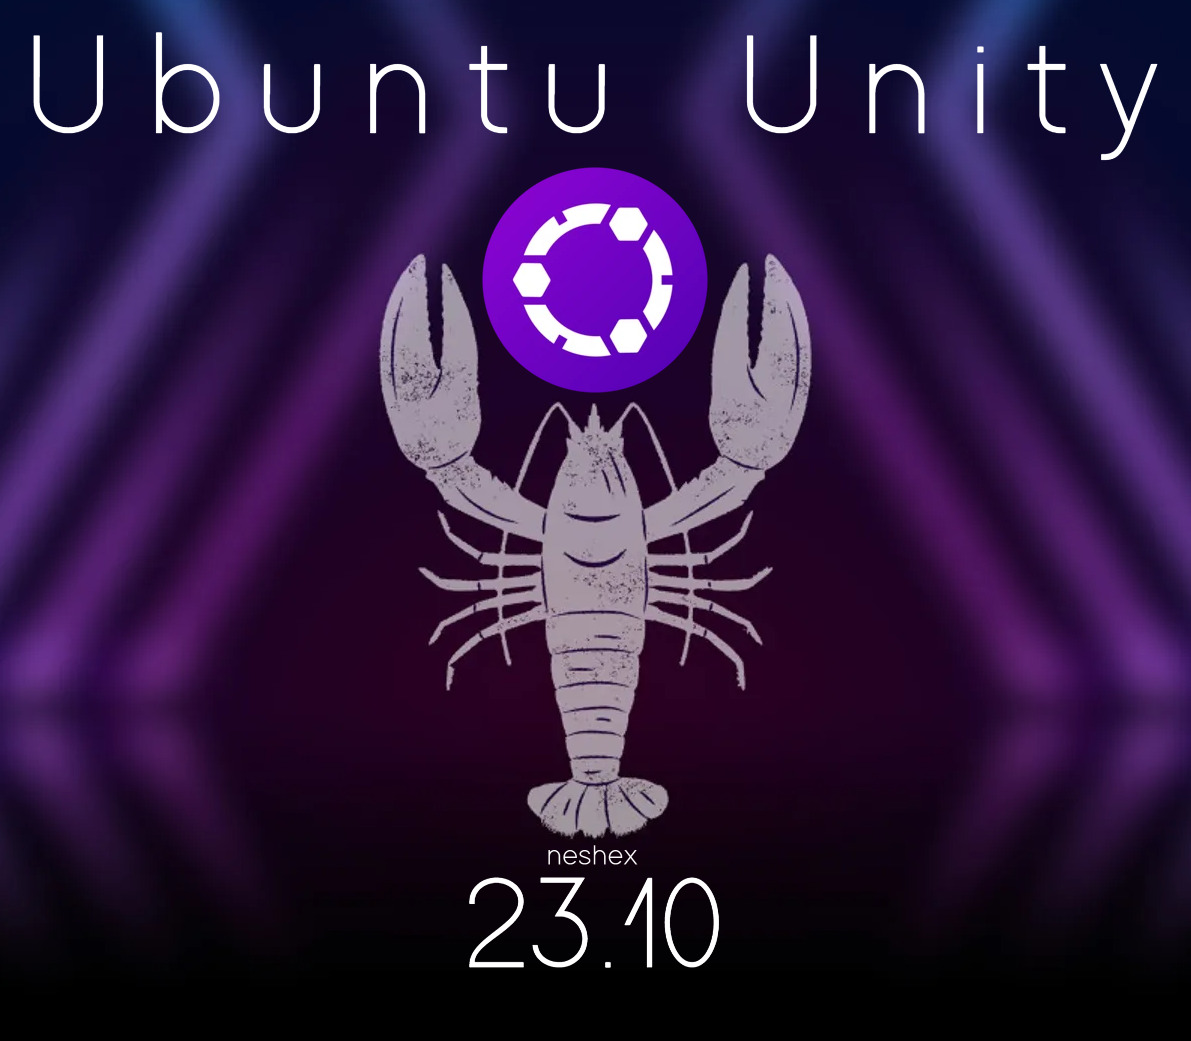 Ubuntu Unity Latest 23.10 Bootable USB Flash Drive